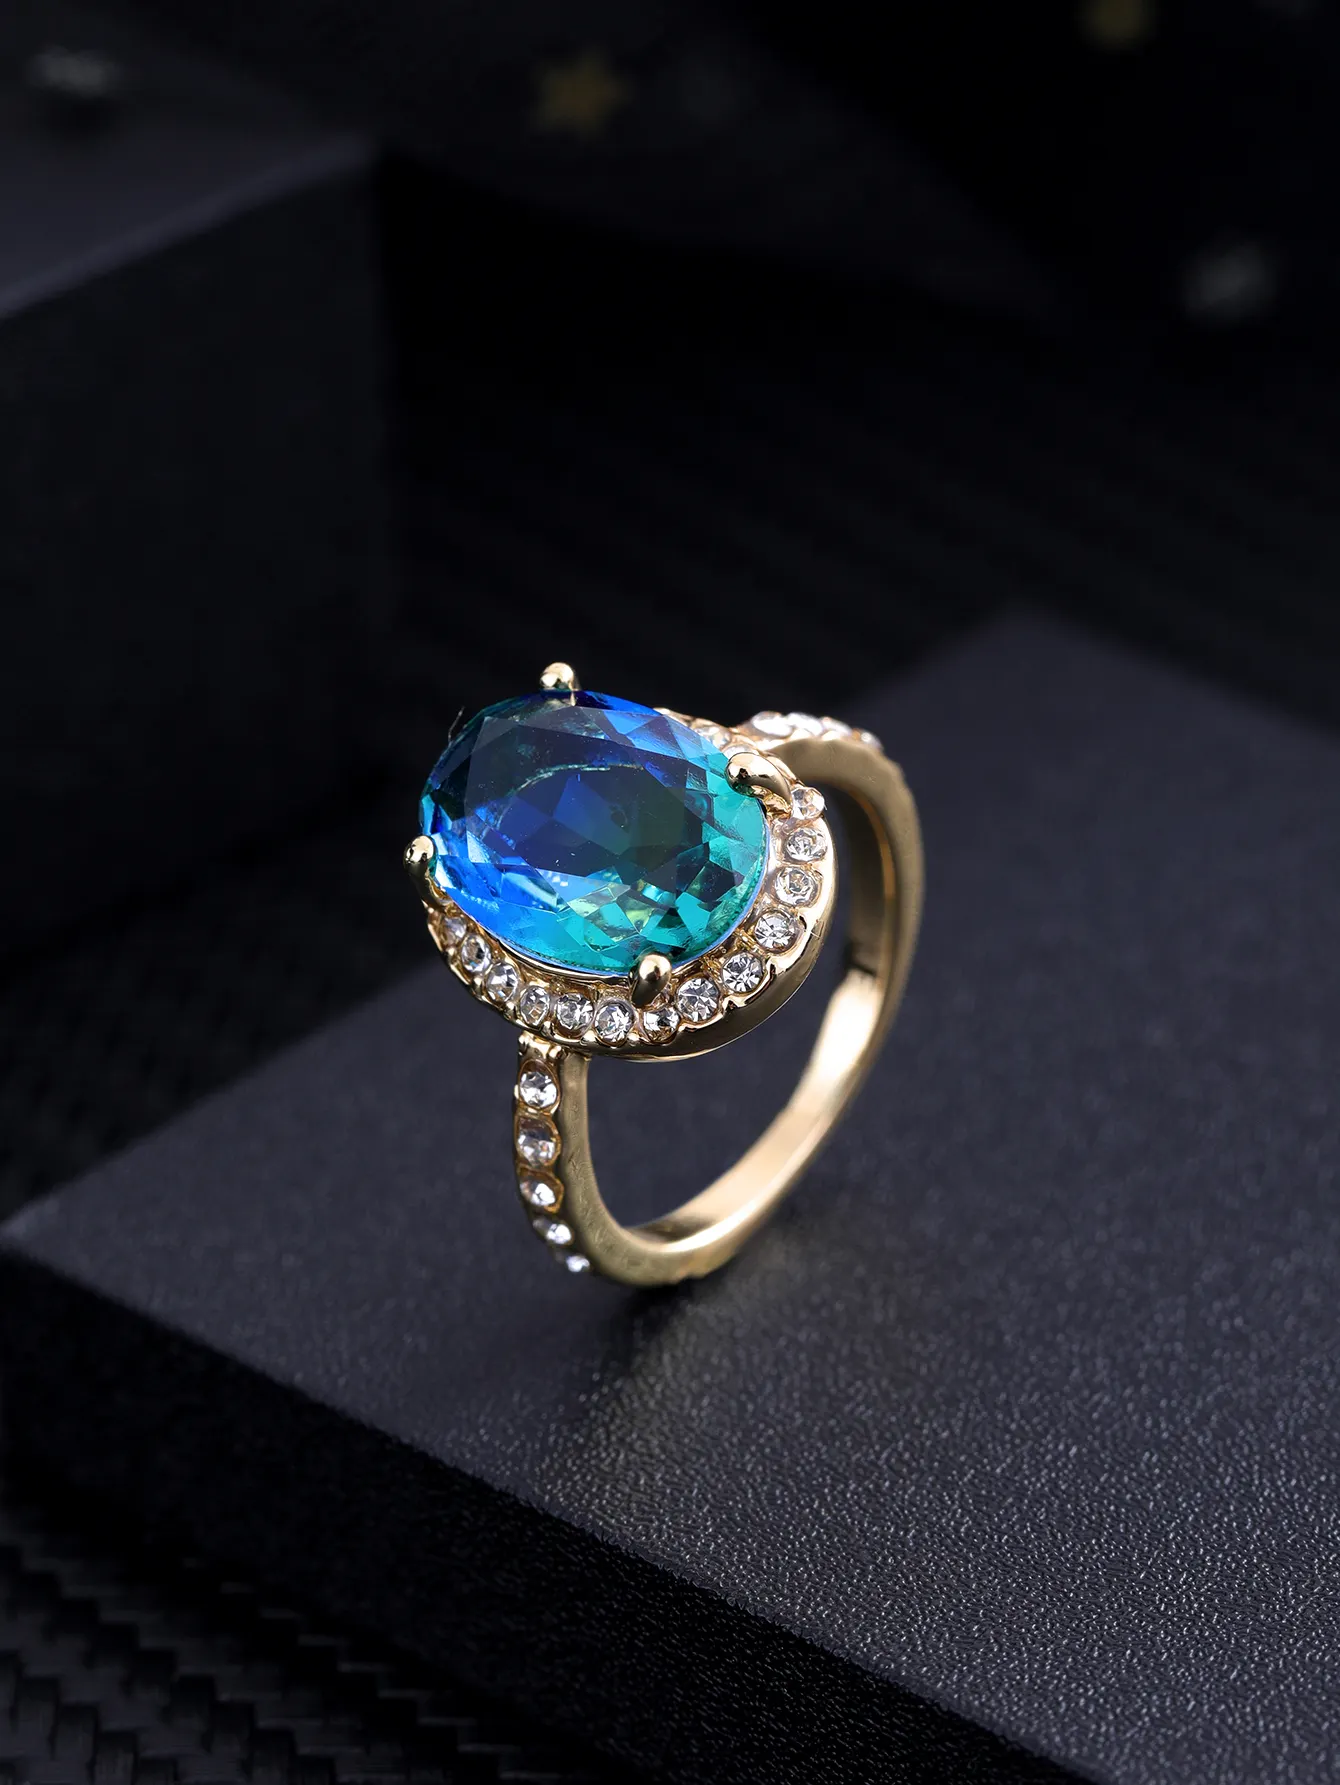 Perhiasan cincin laut elegan untuk wanita, cincin perhiasan model Eropa elegan klasik bundar berlian biru mewah hati laut untuk wanita